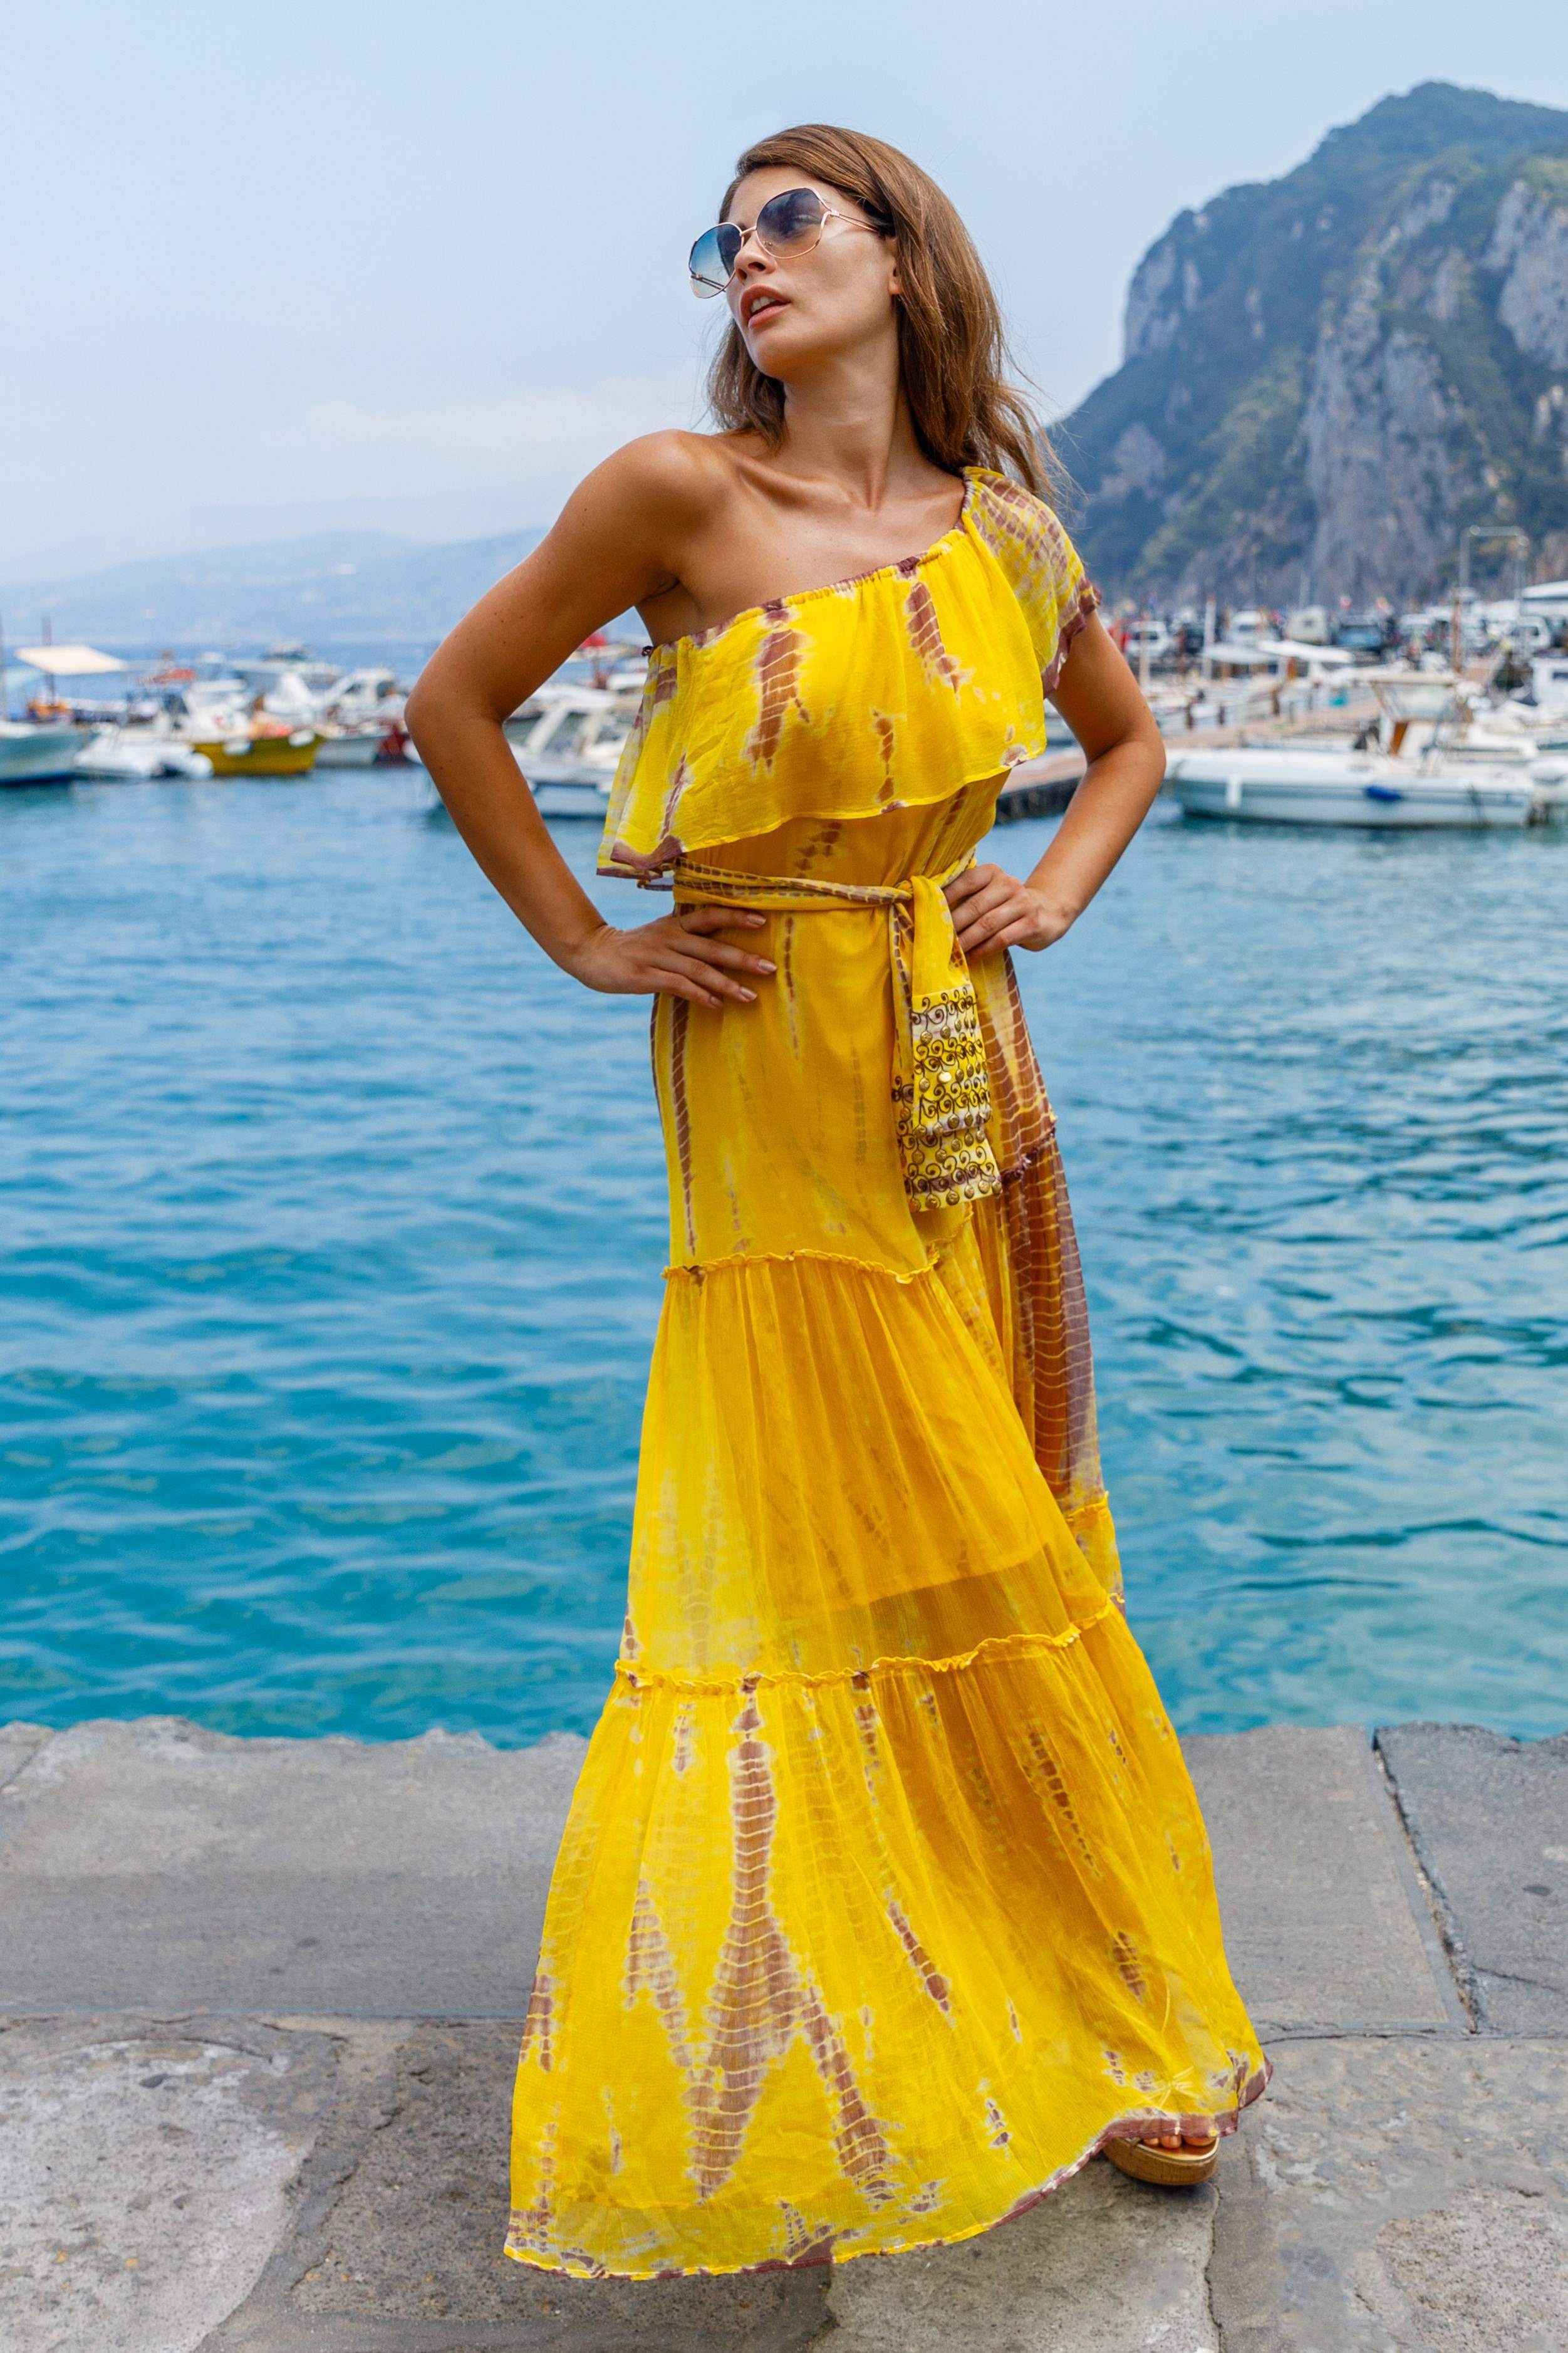 Yellow silk multi way resort wear dress Mykonos by Lindsey Brown resort wear to wear on holiday. Style bardot or on the shoulder as a resort wear holiday dress by Lindsey Brown 